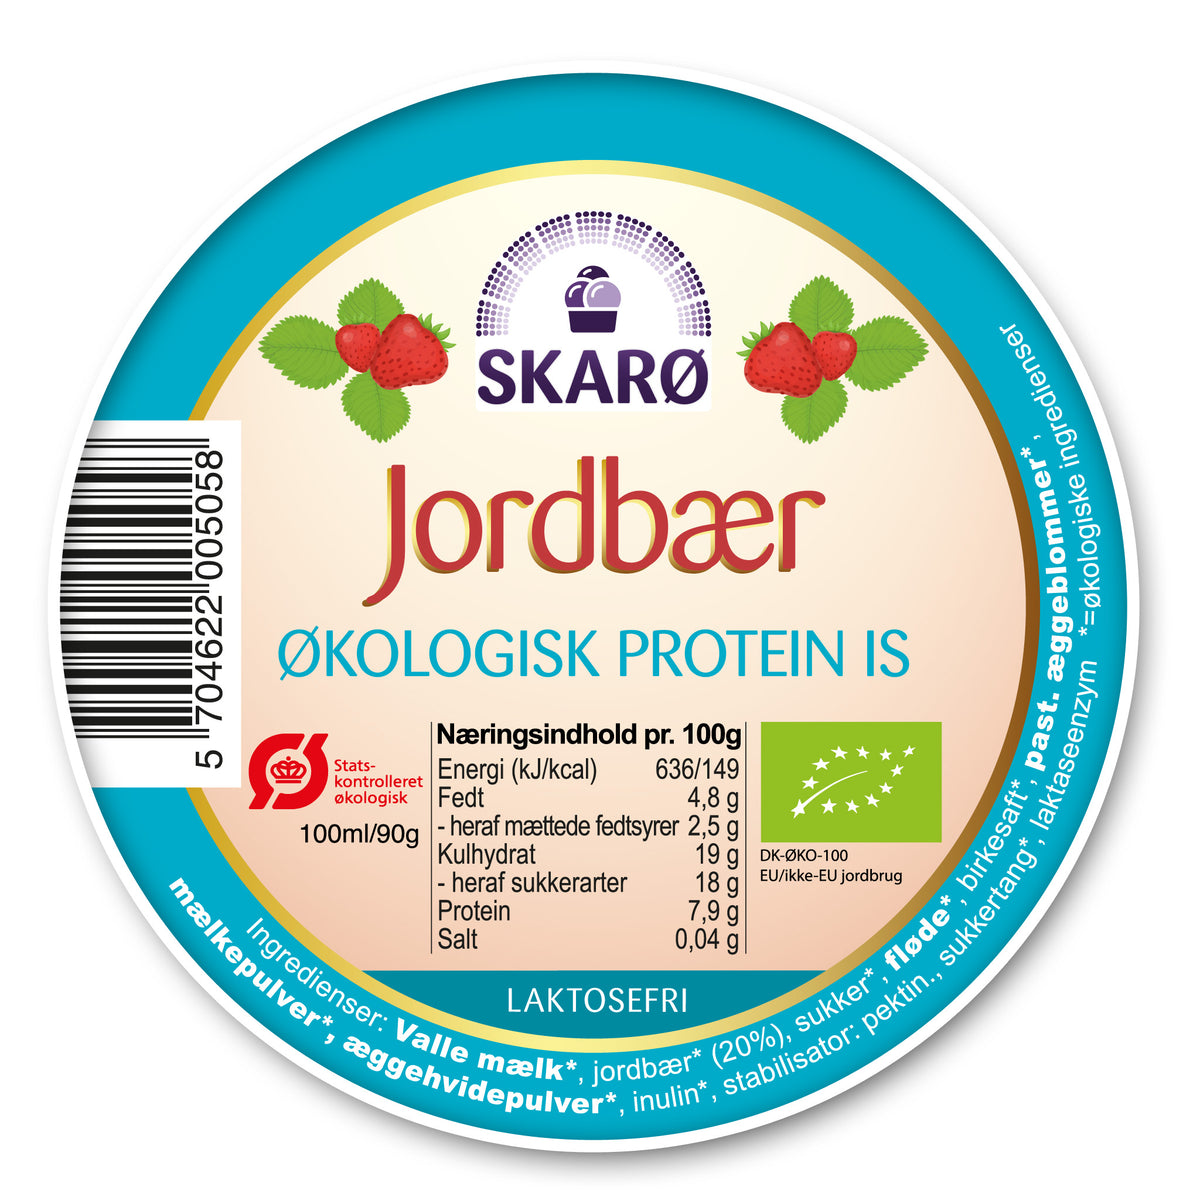 Økologisk Proteinis med Jordbær fra Skarø